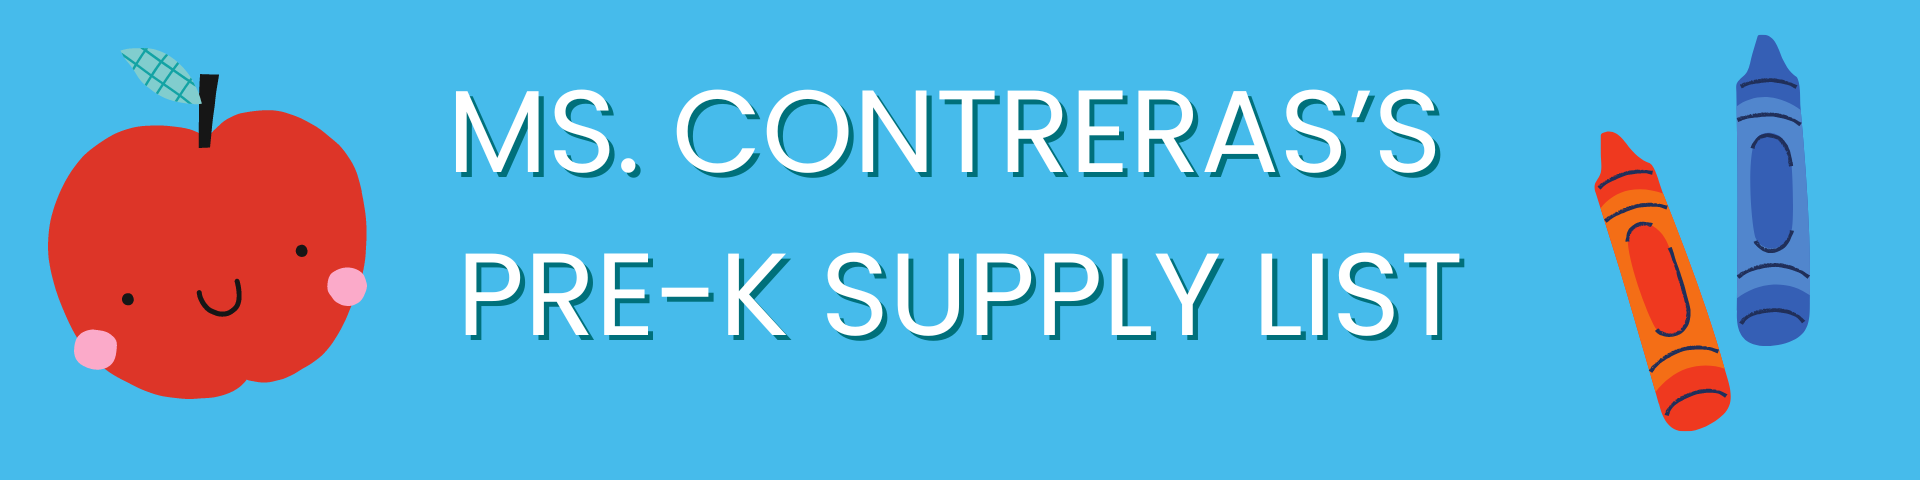 Contreras Supply List